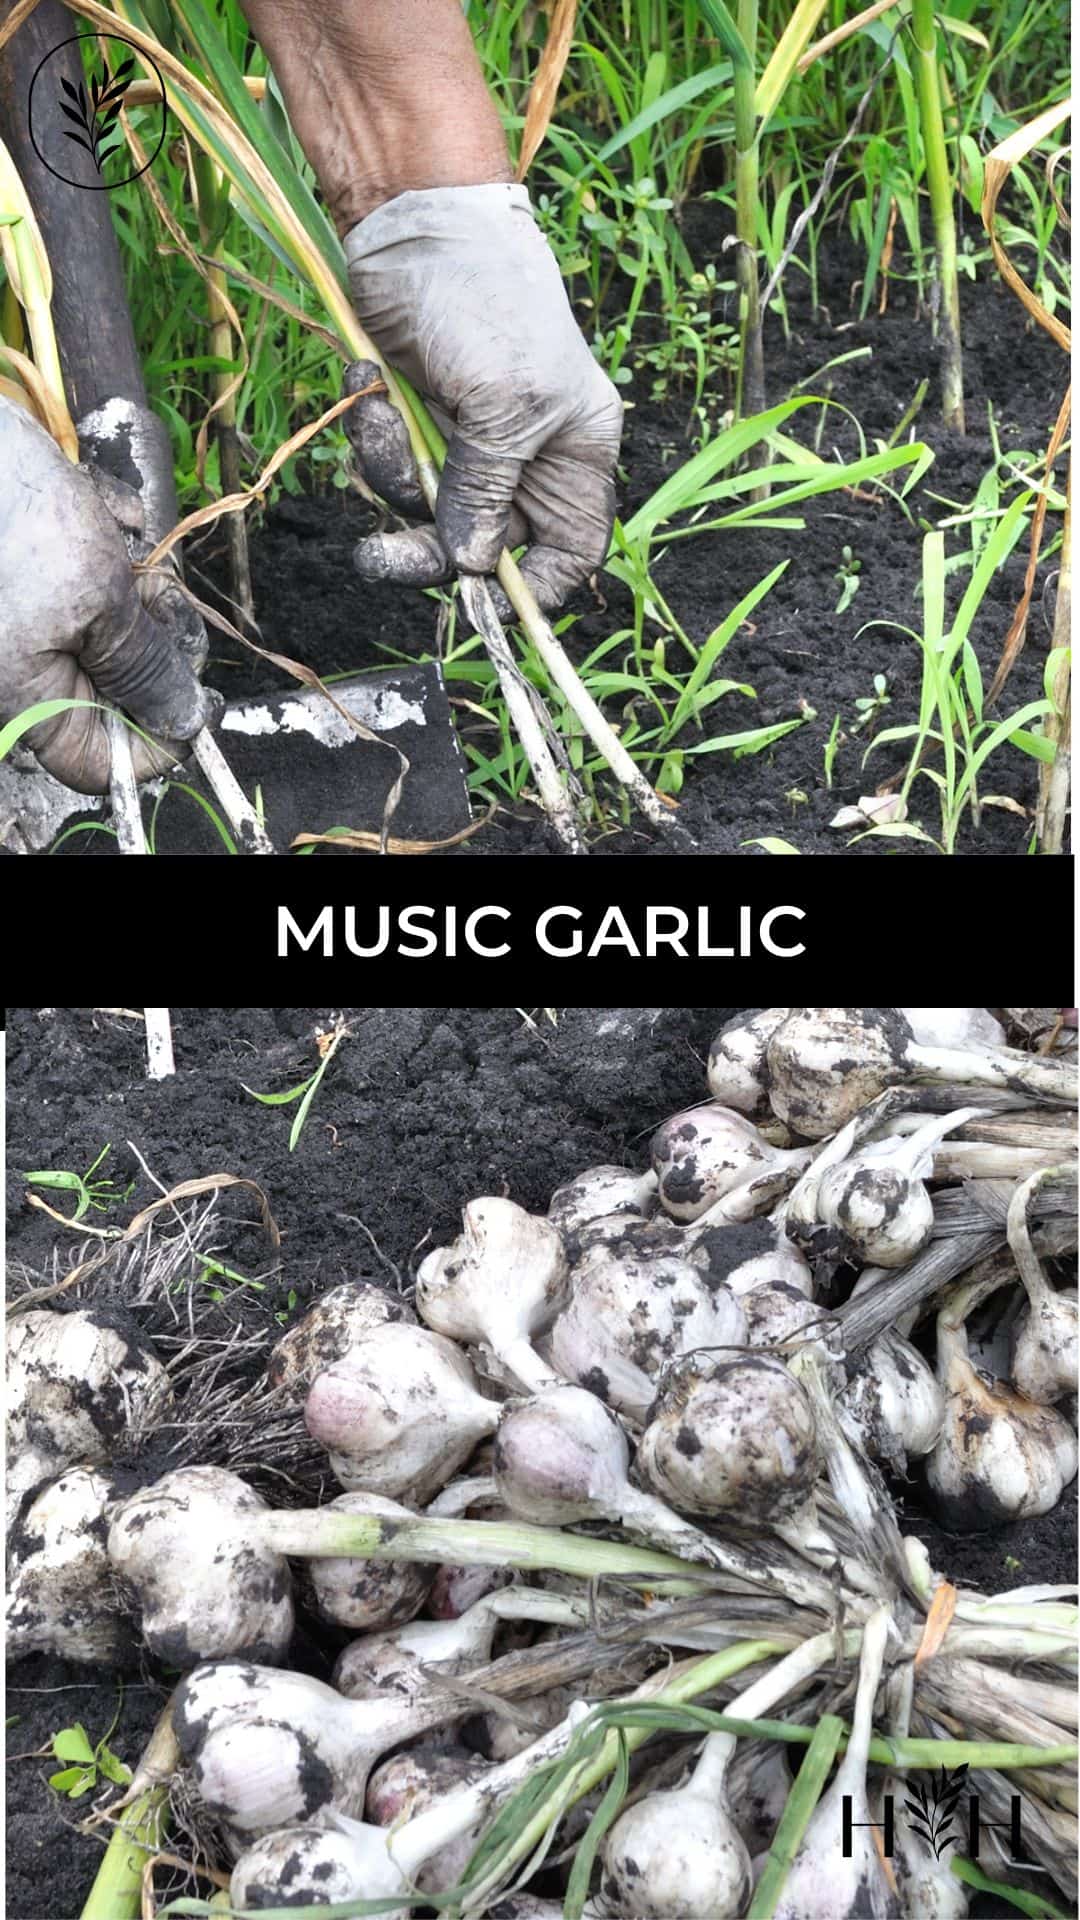 Music garlic via @home4theharvest